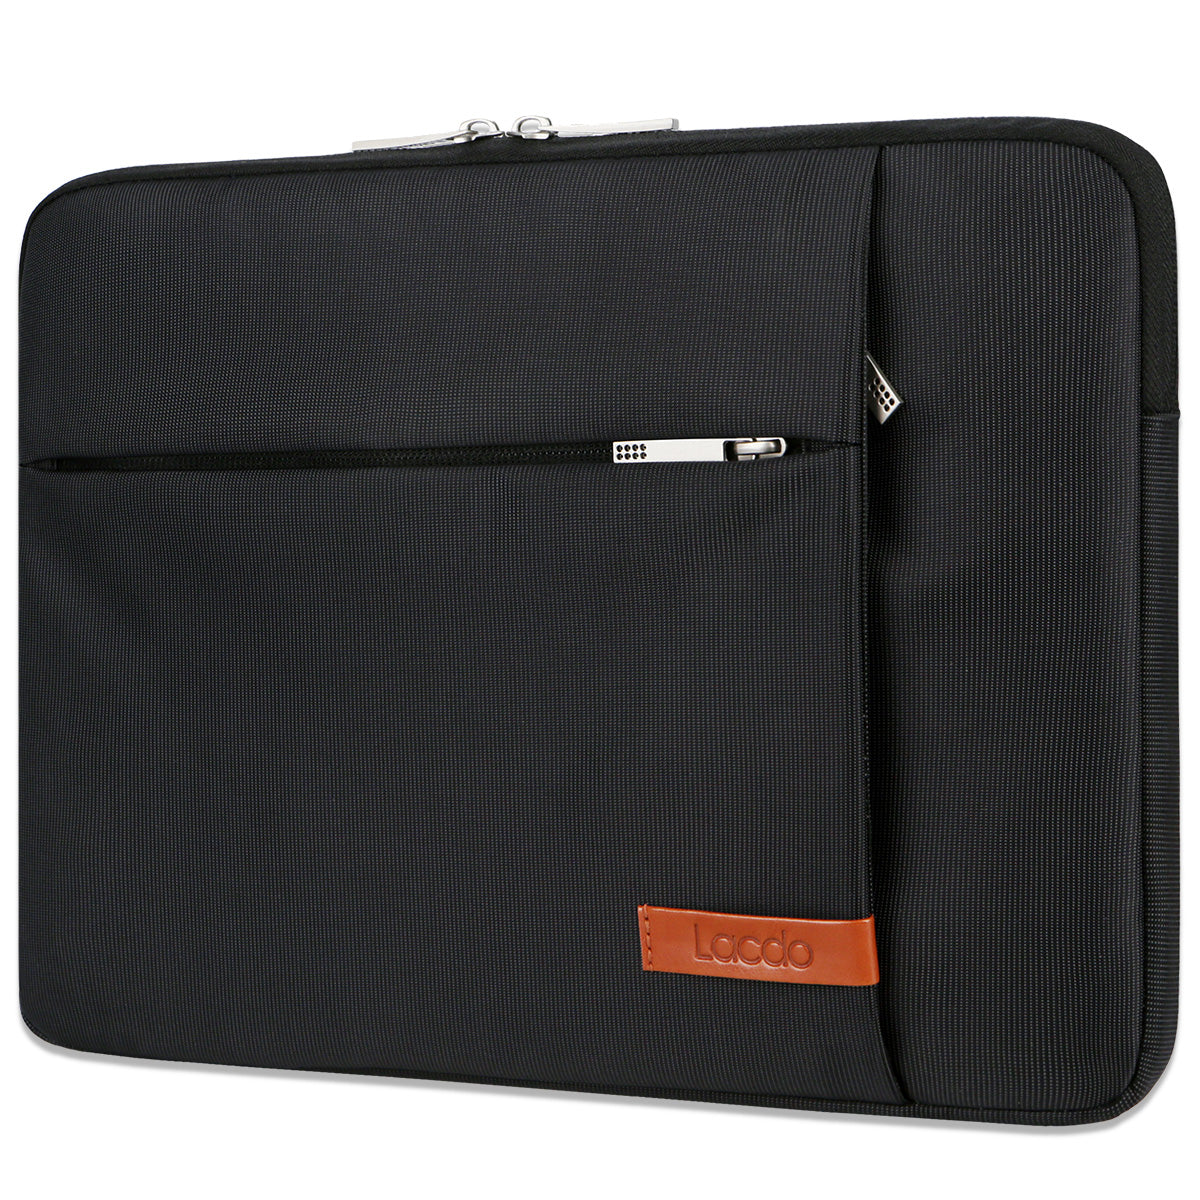 15.6 inch Laptop Sleeve Case Computer Bag